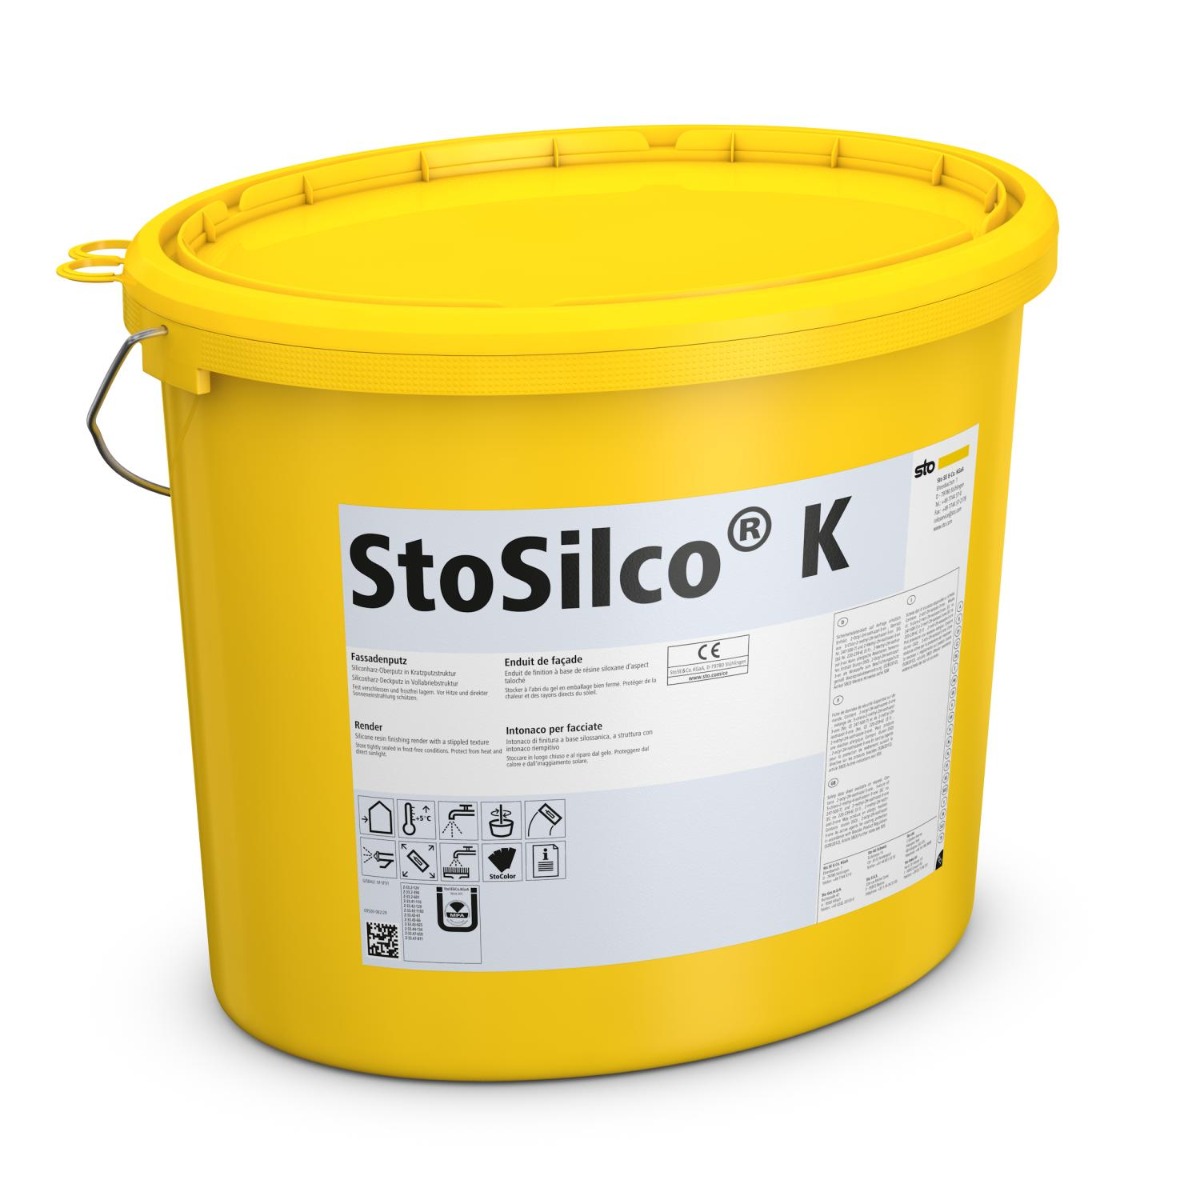 StoSilco QS K -25 kg Korn 1,5-Farbtonklasse I 